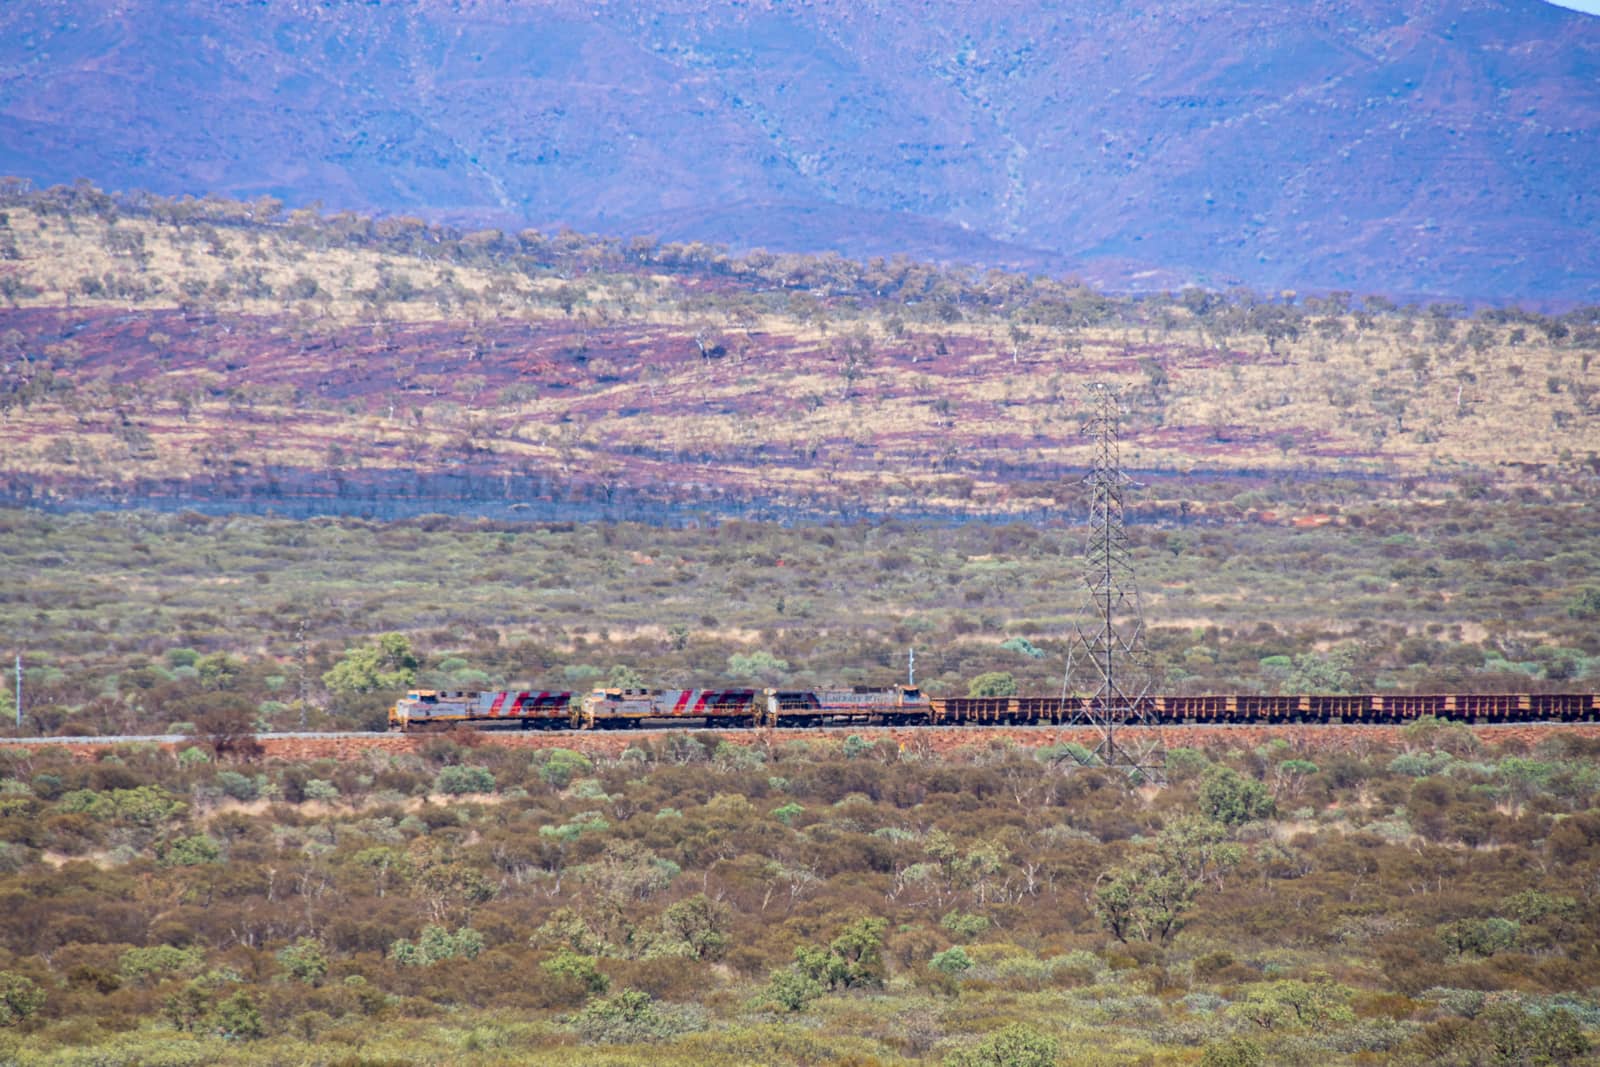 Long train at Karijini National Park transporting iron ore from Marandoo mine site towards next port